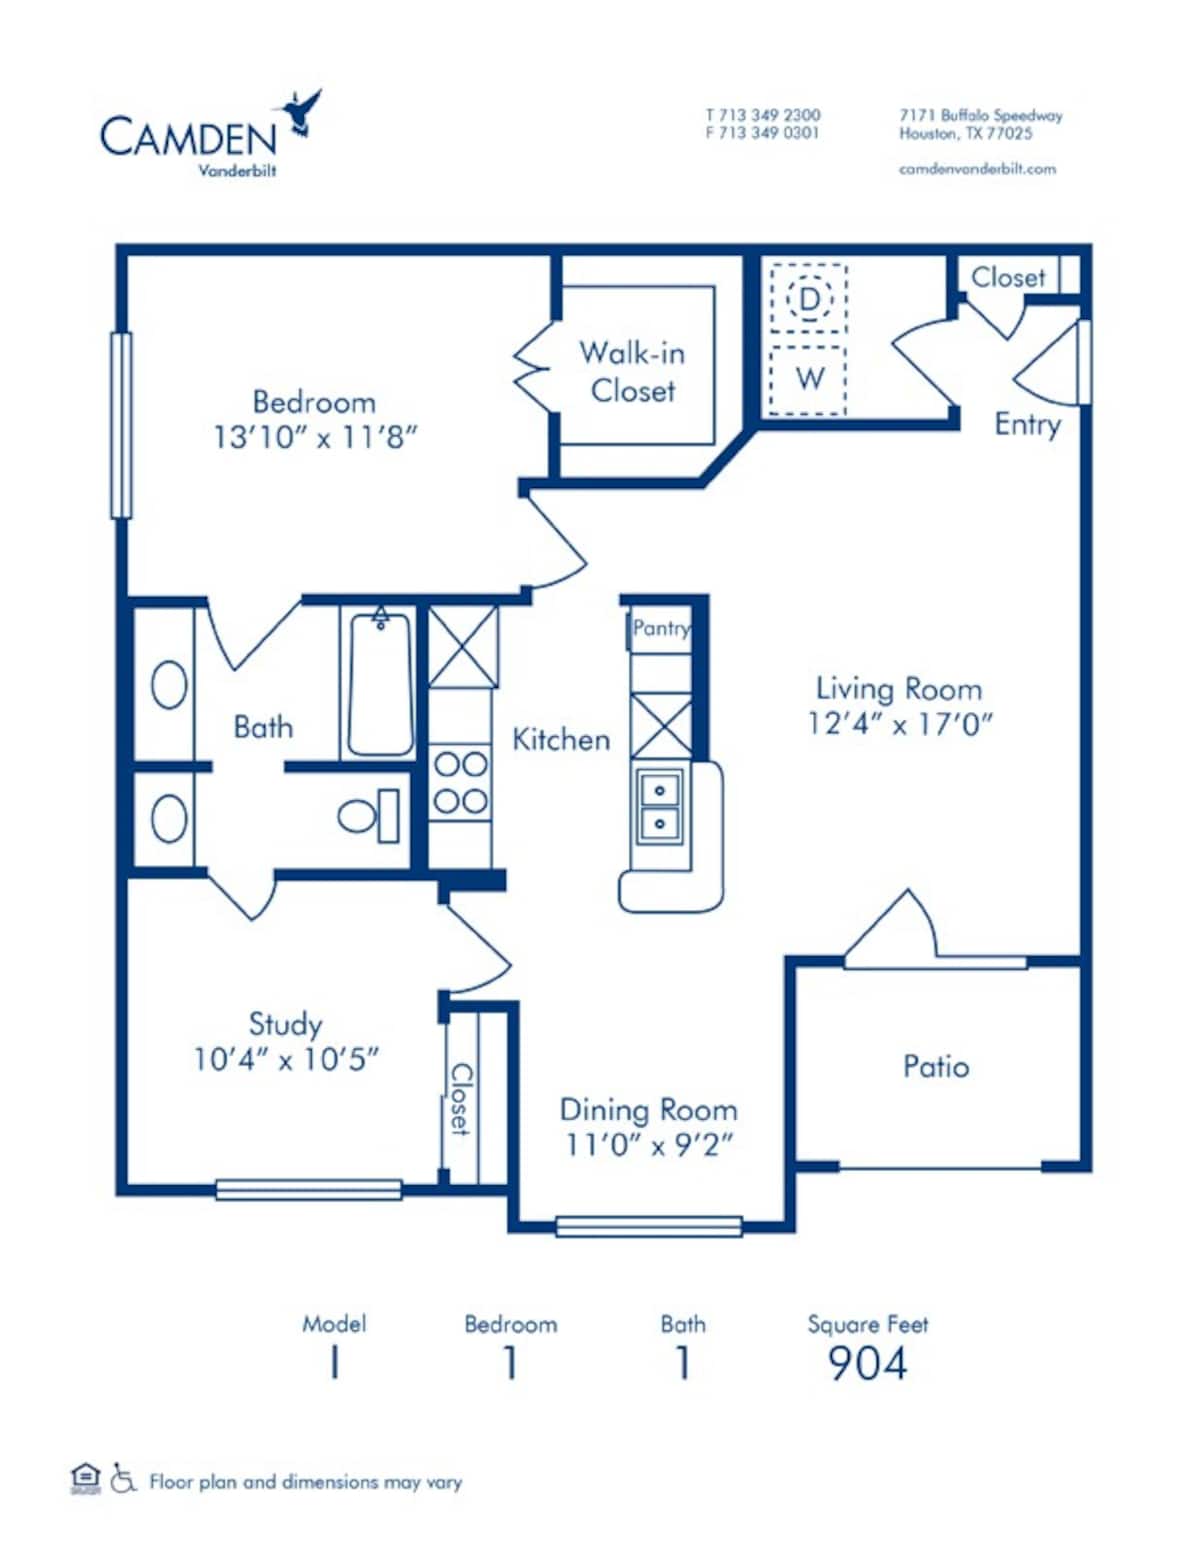 Floorplan diagram for I, showing 1 bedroom